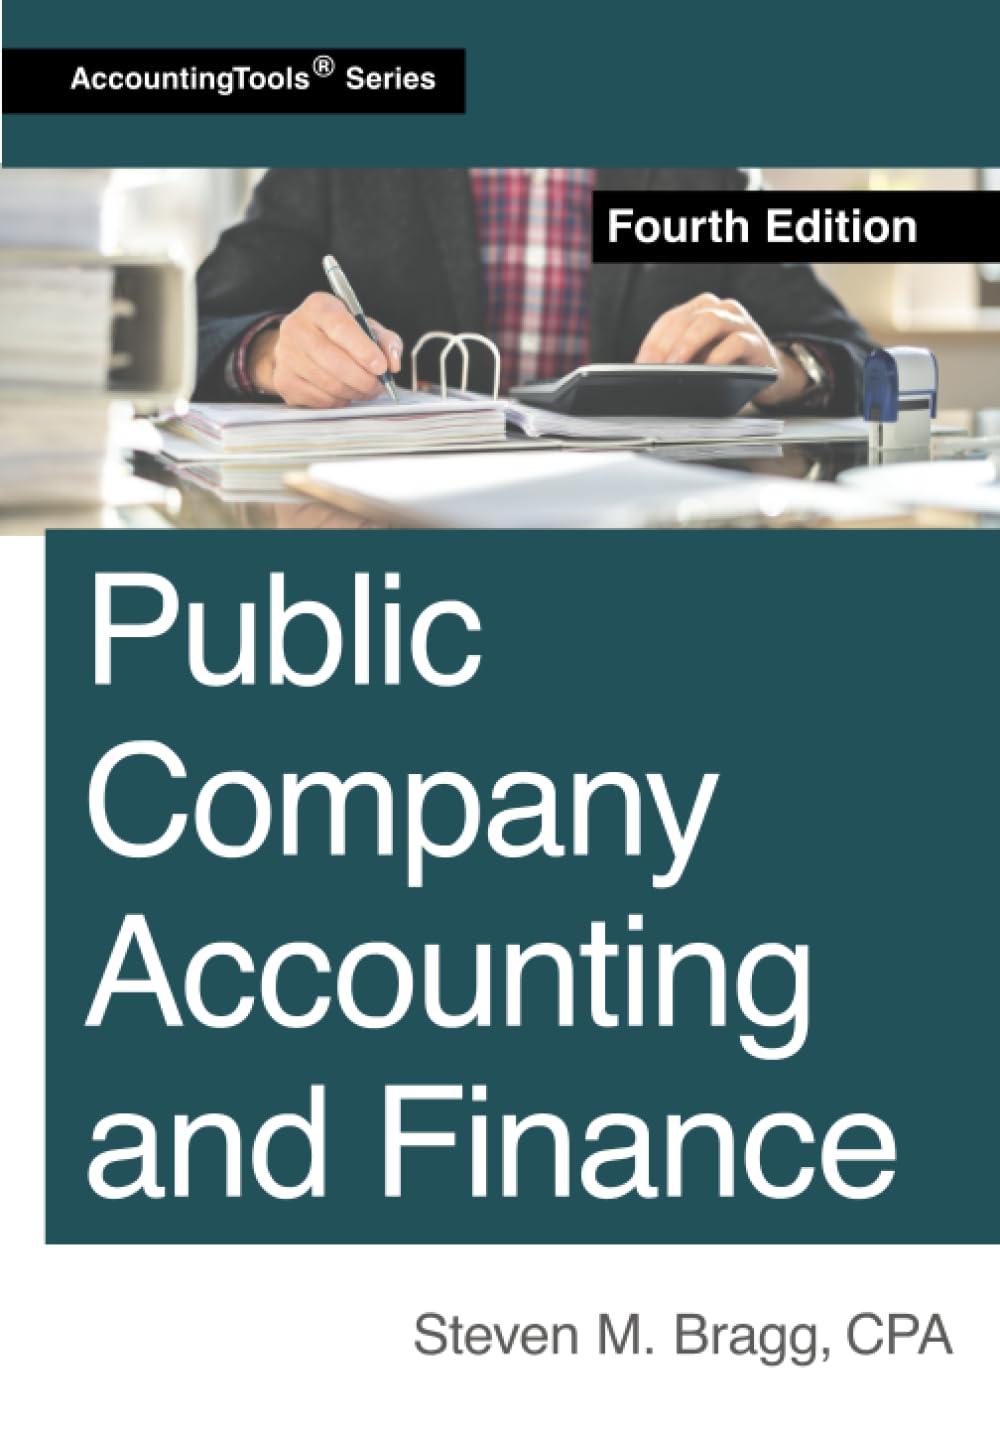 public company accounting and finance 4th edition steven m. bragg 1642211087, 978-1642211085